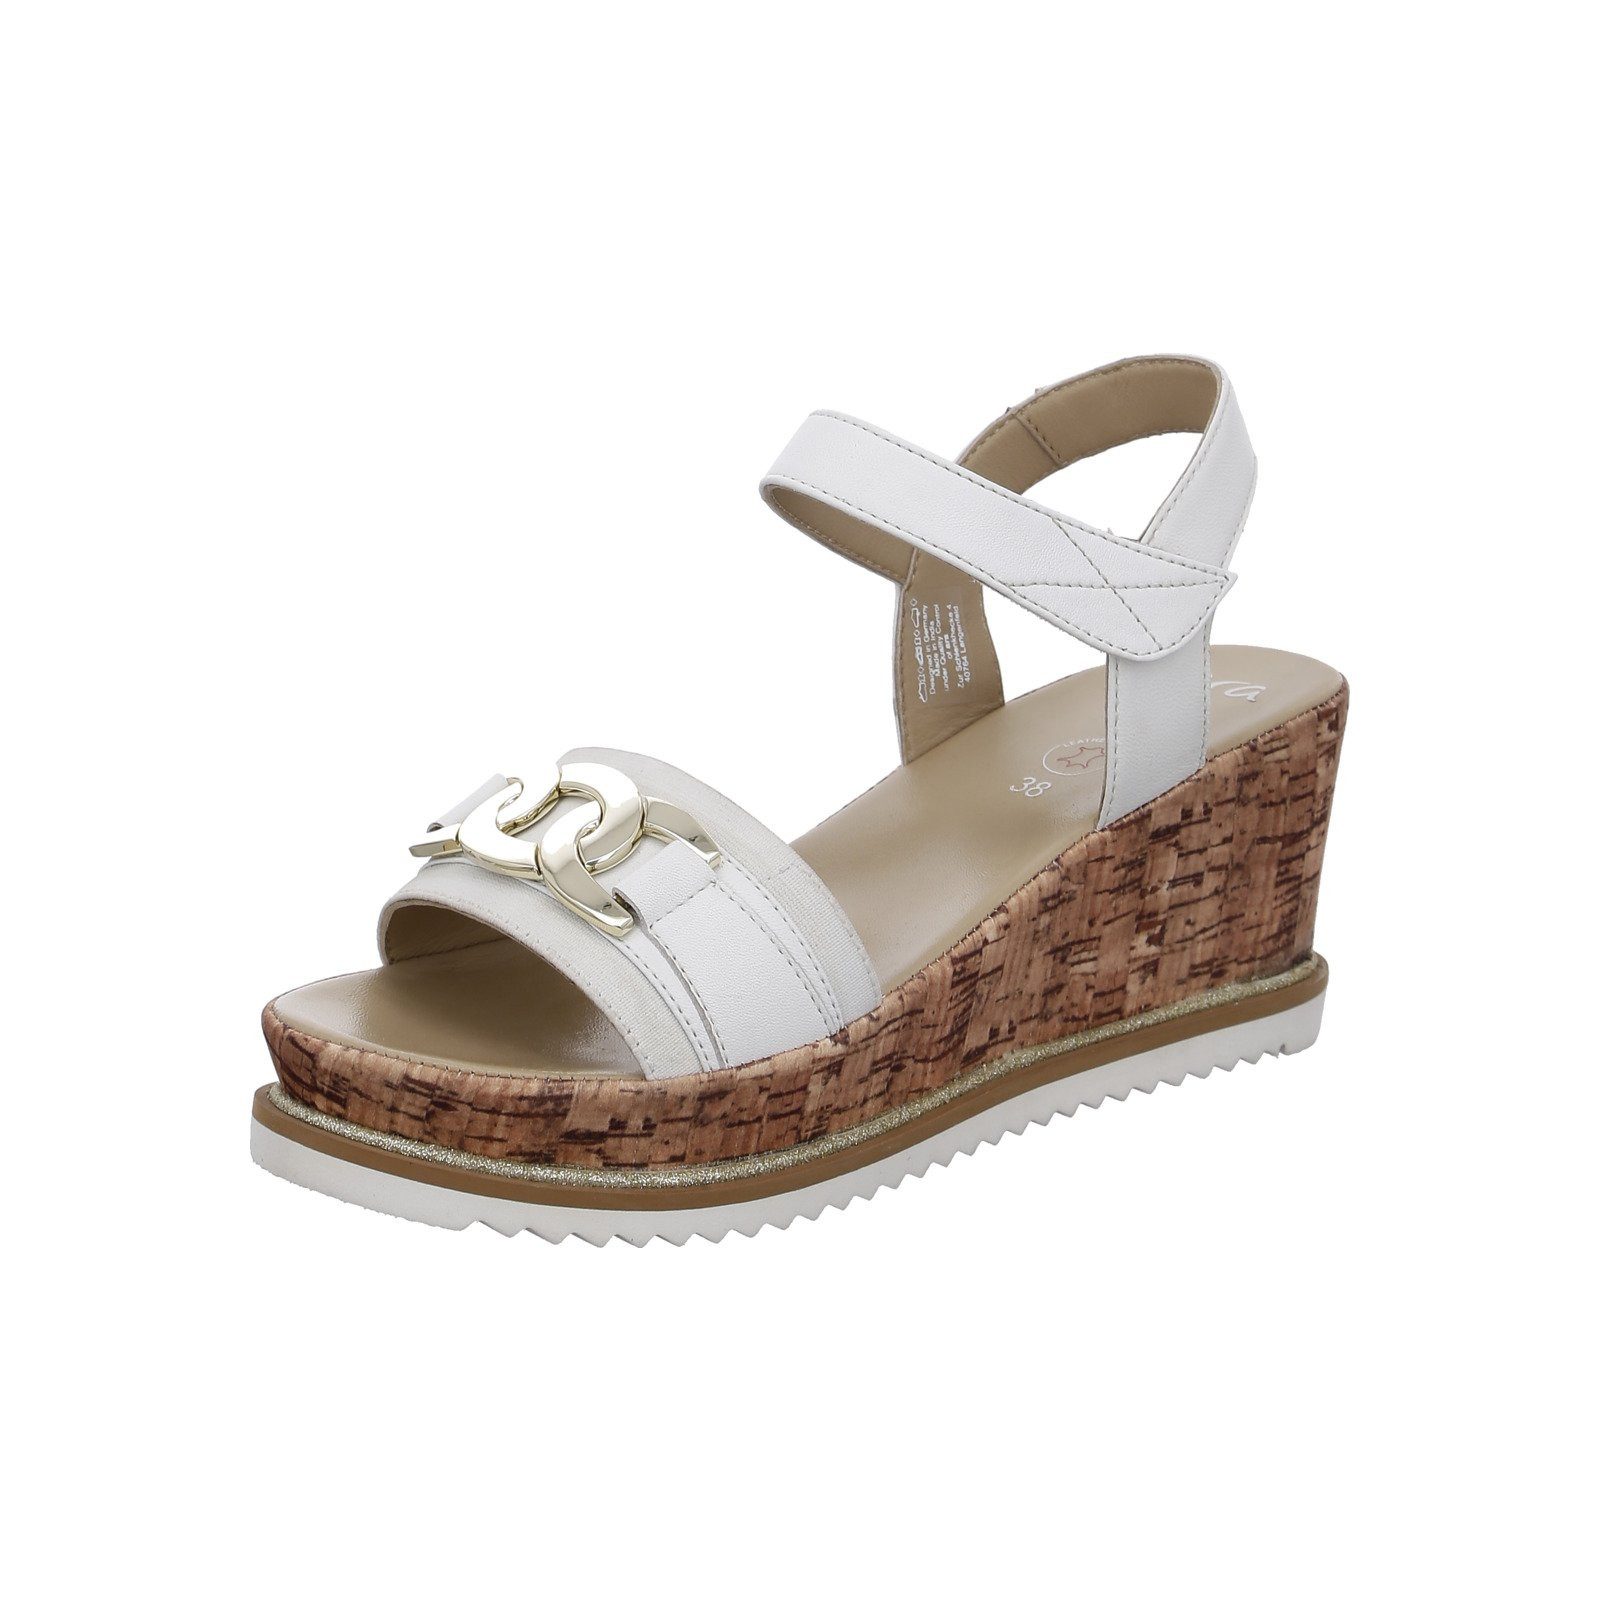 Ara Parma - Damen Schuhe Sandalette Glattleder weiß